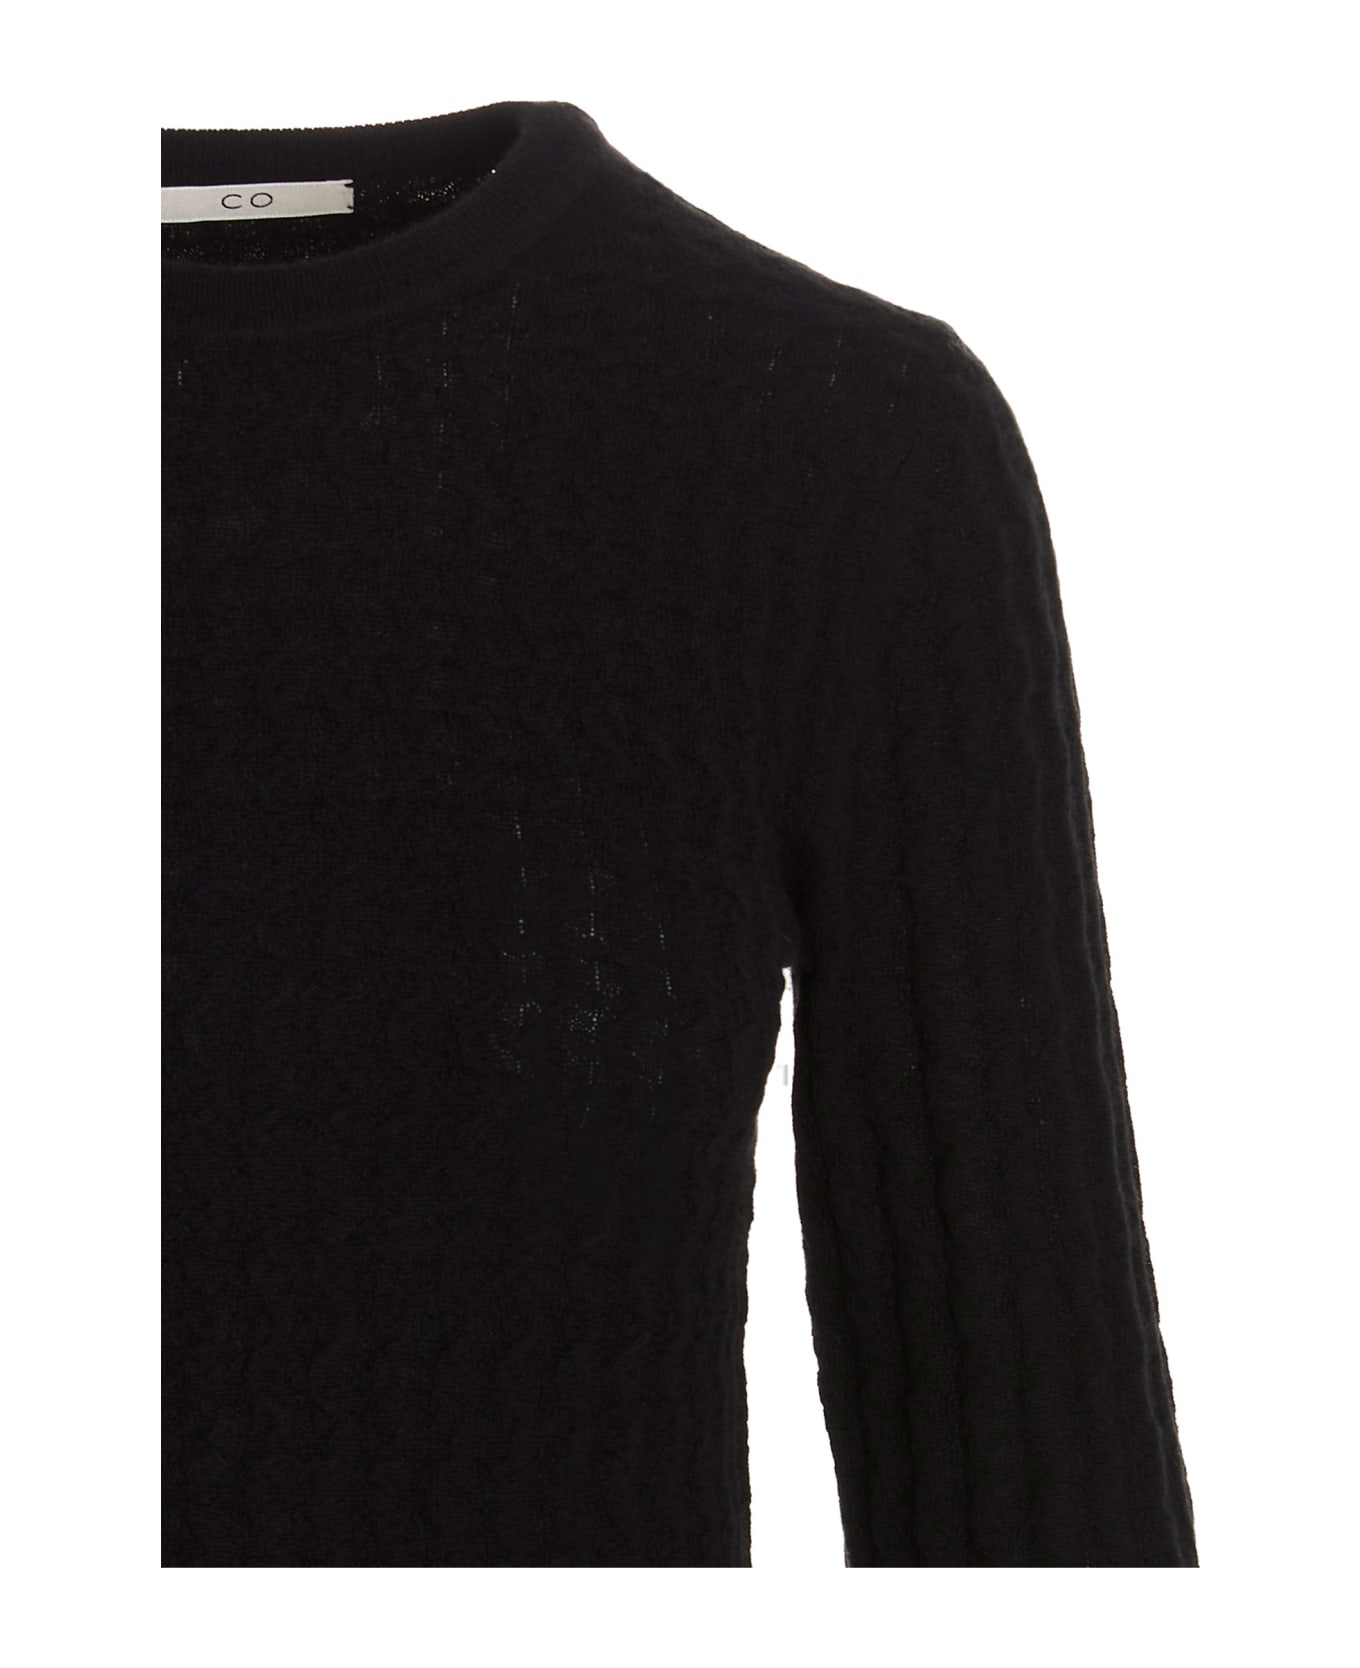 Co Worked Sweater - Black   ニットウェア